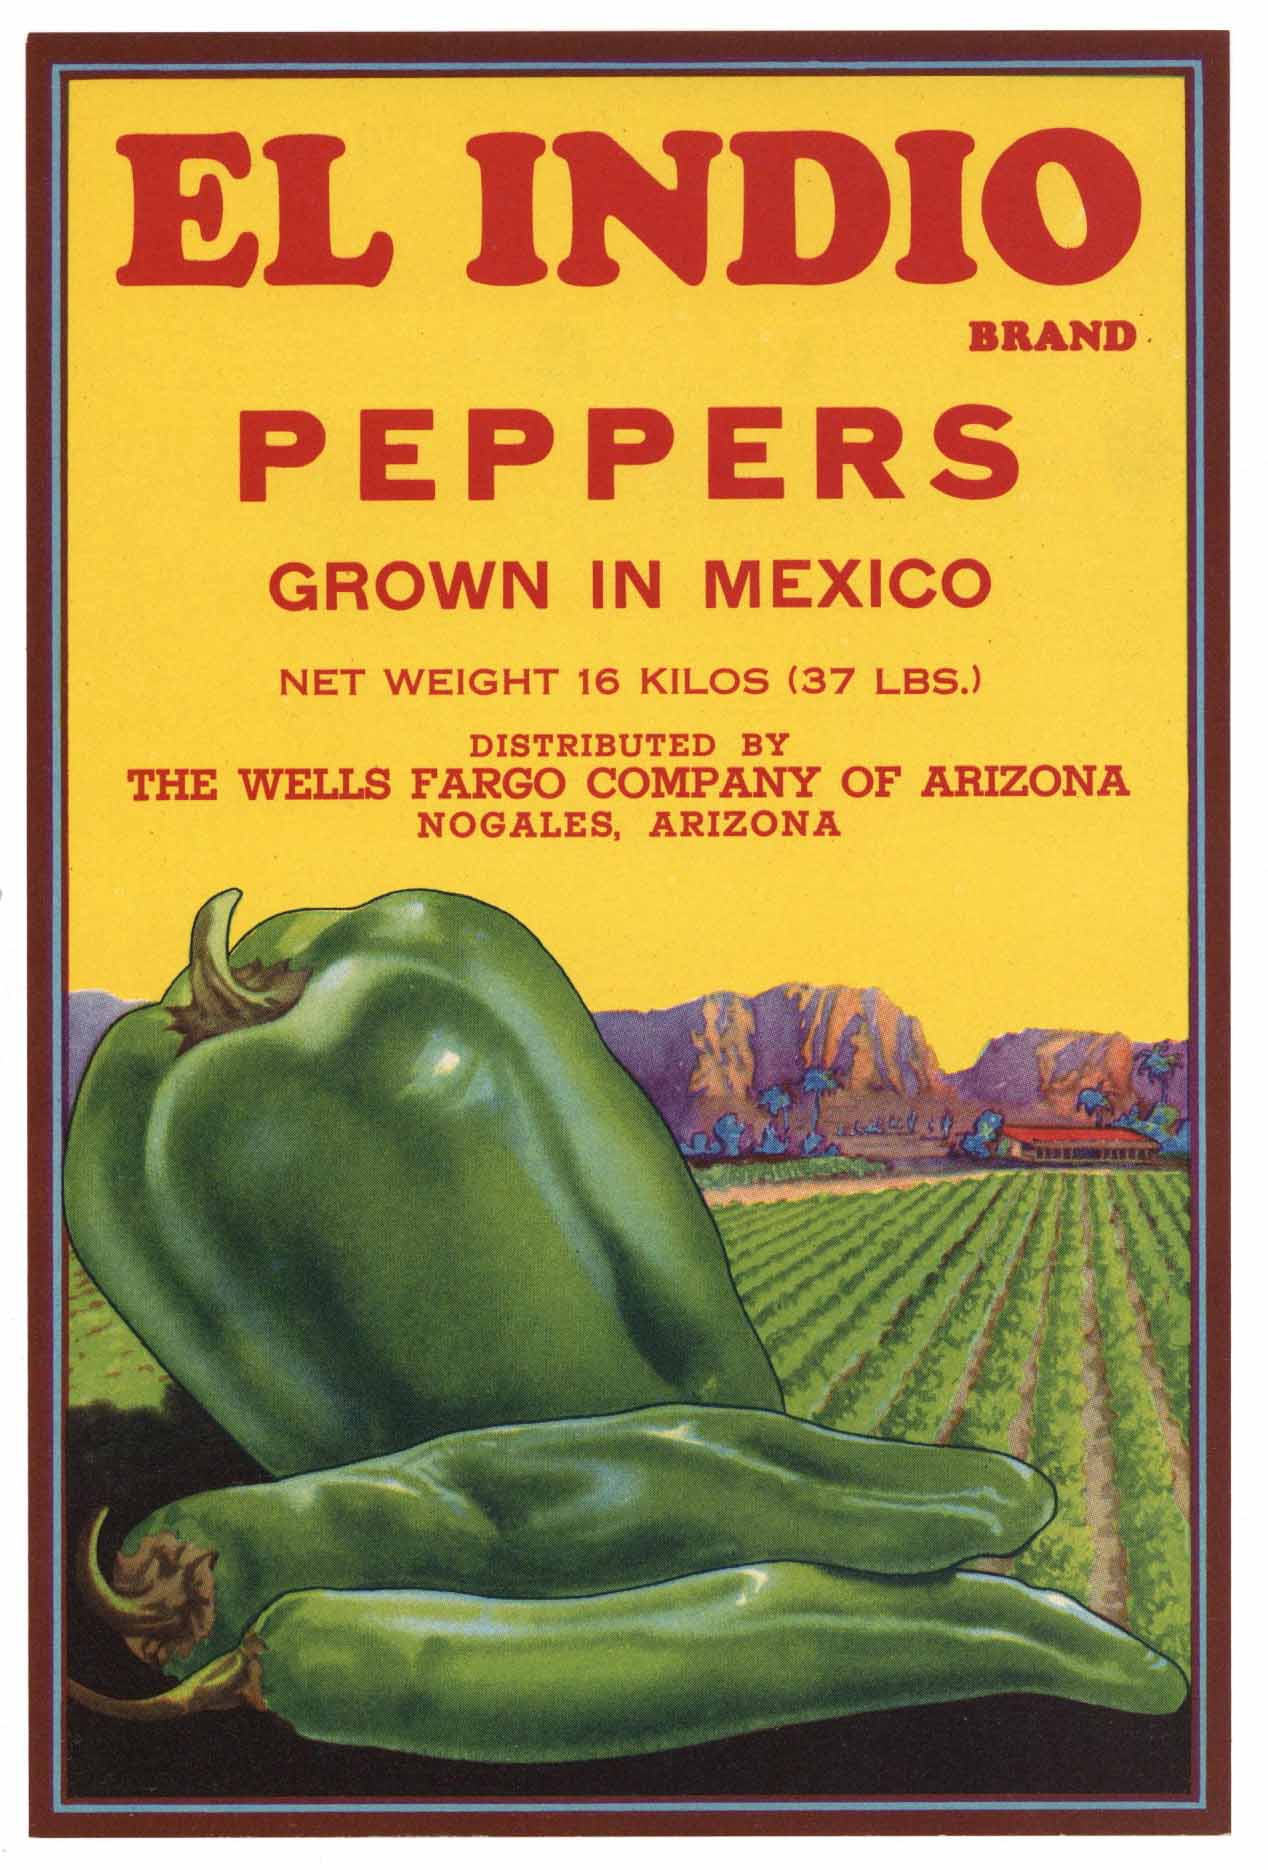 El Indio Brand Vintage Vegetable Crate Label, Pepper